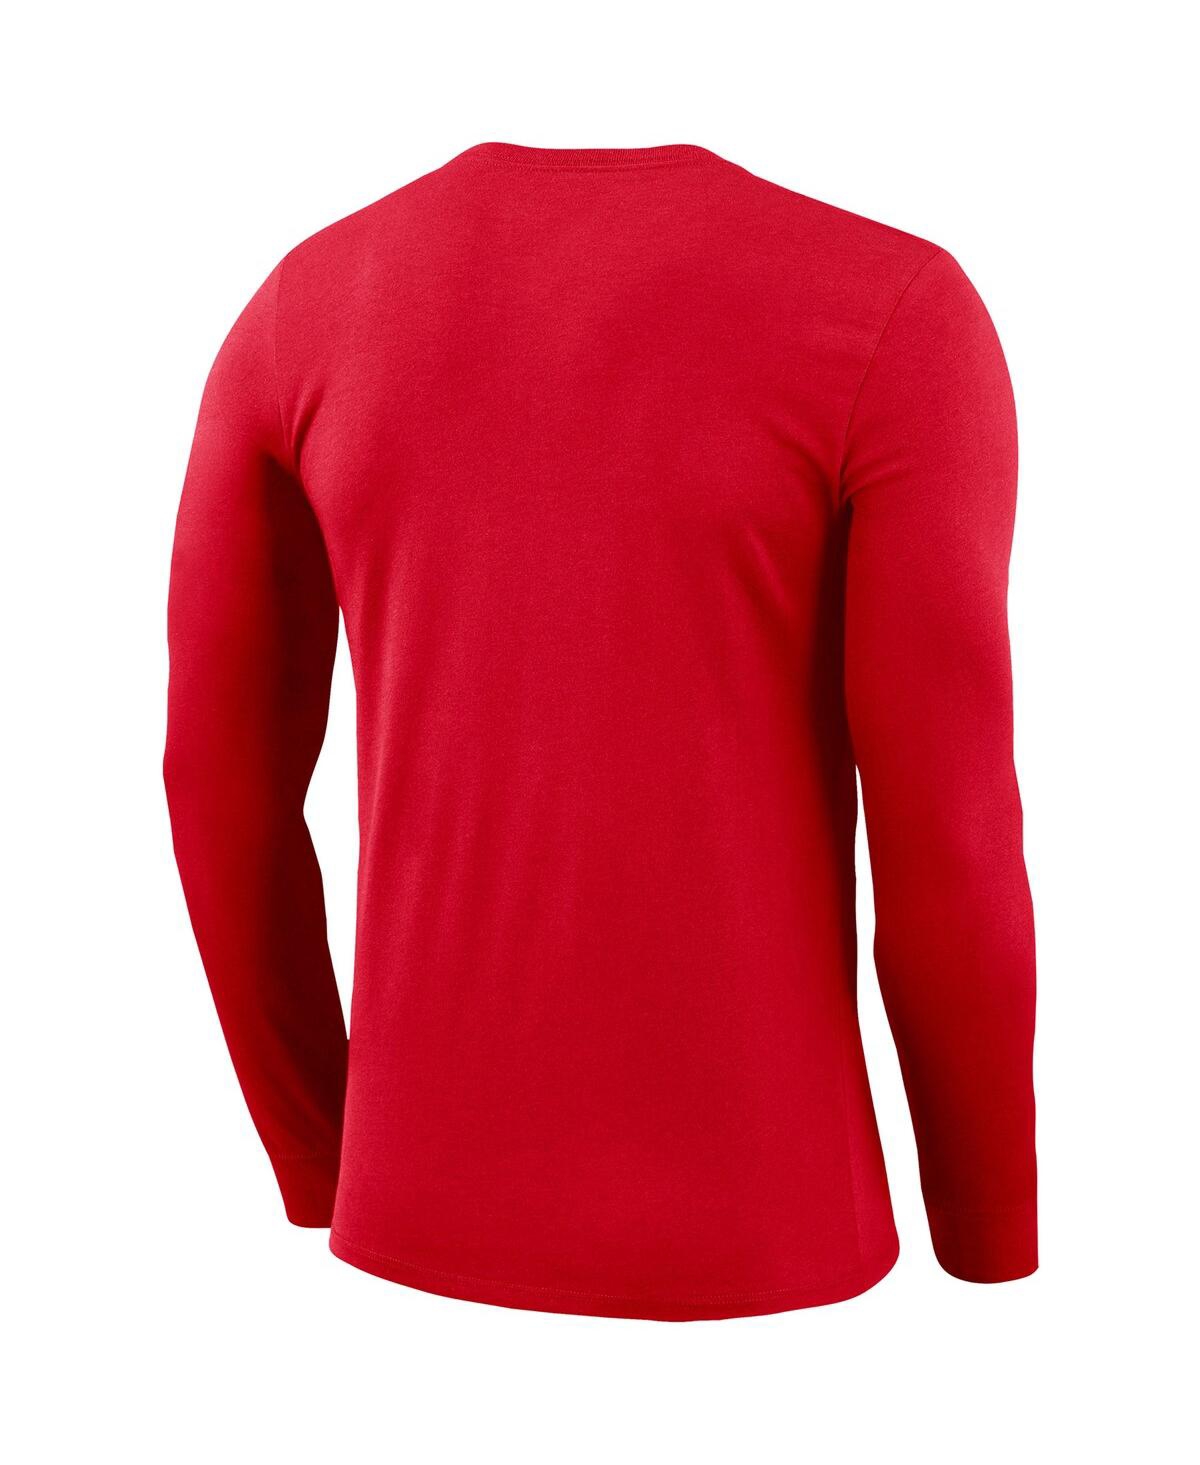 Shop Nike Men's  Red Gonzaga Bulldogs Basketball Icon Legend Performance Long Sleeve T-shirt